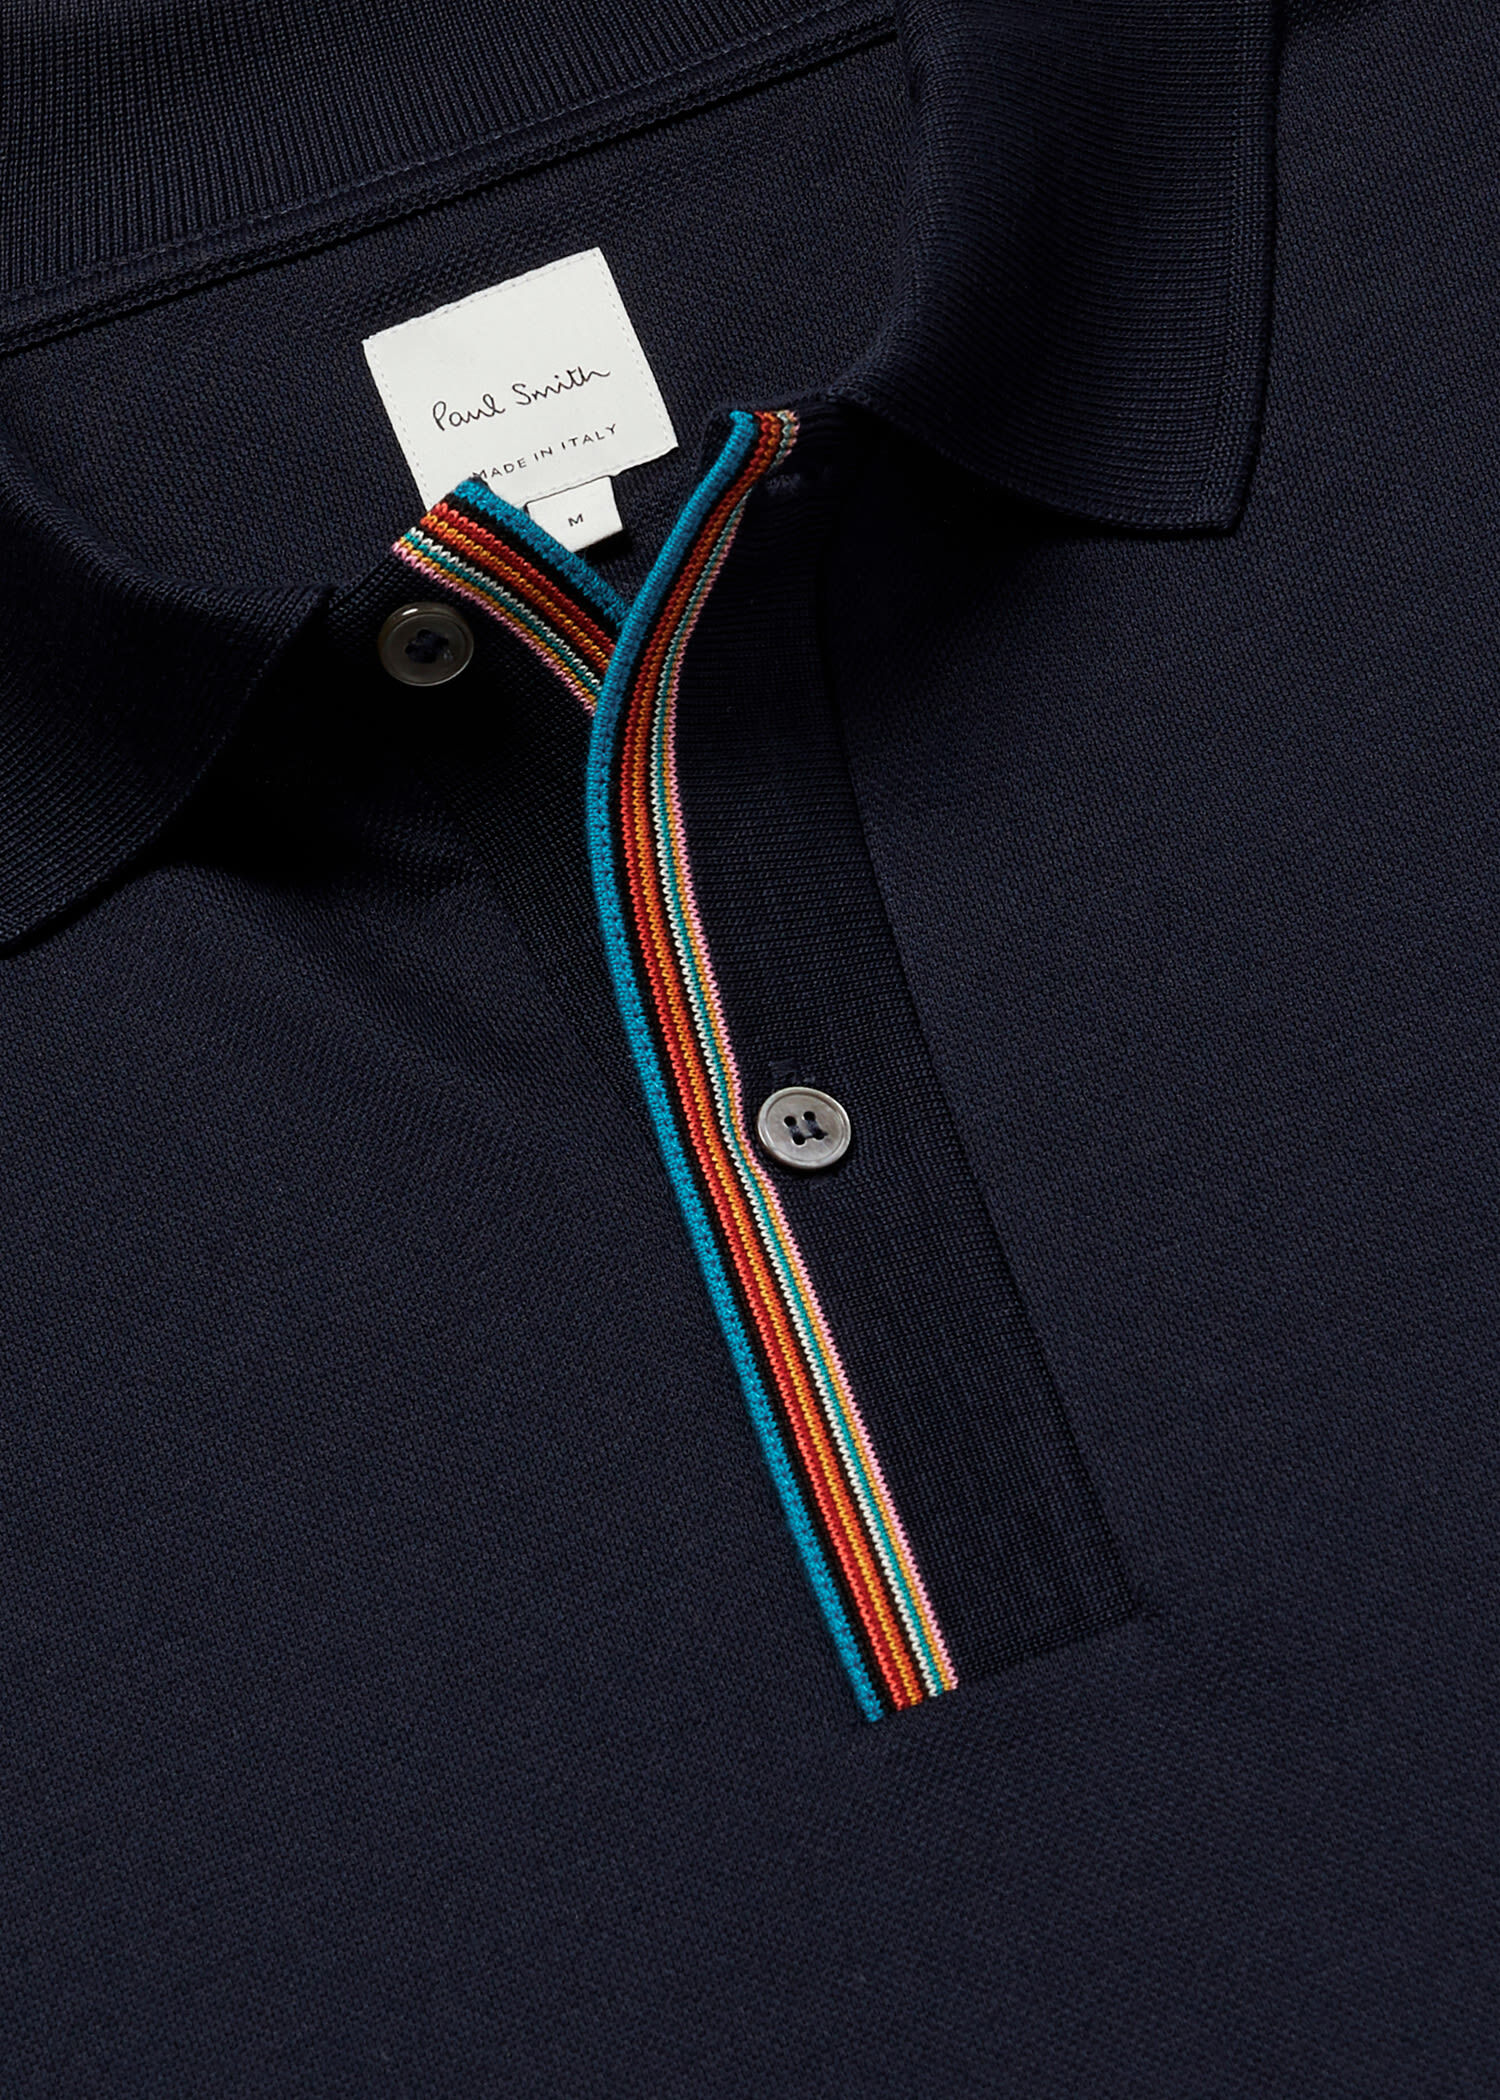 Navy Signature-striped cotton polo shirt, Paul Smith